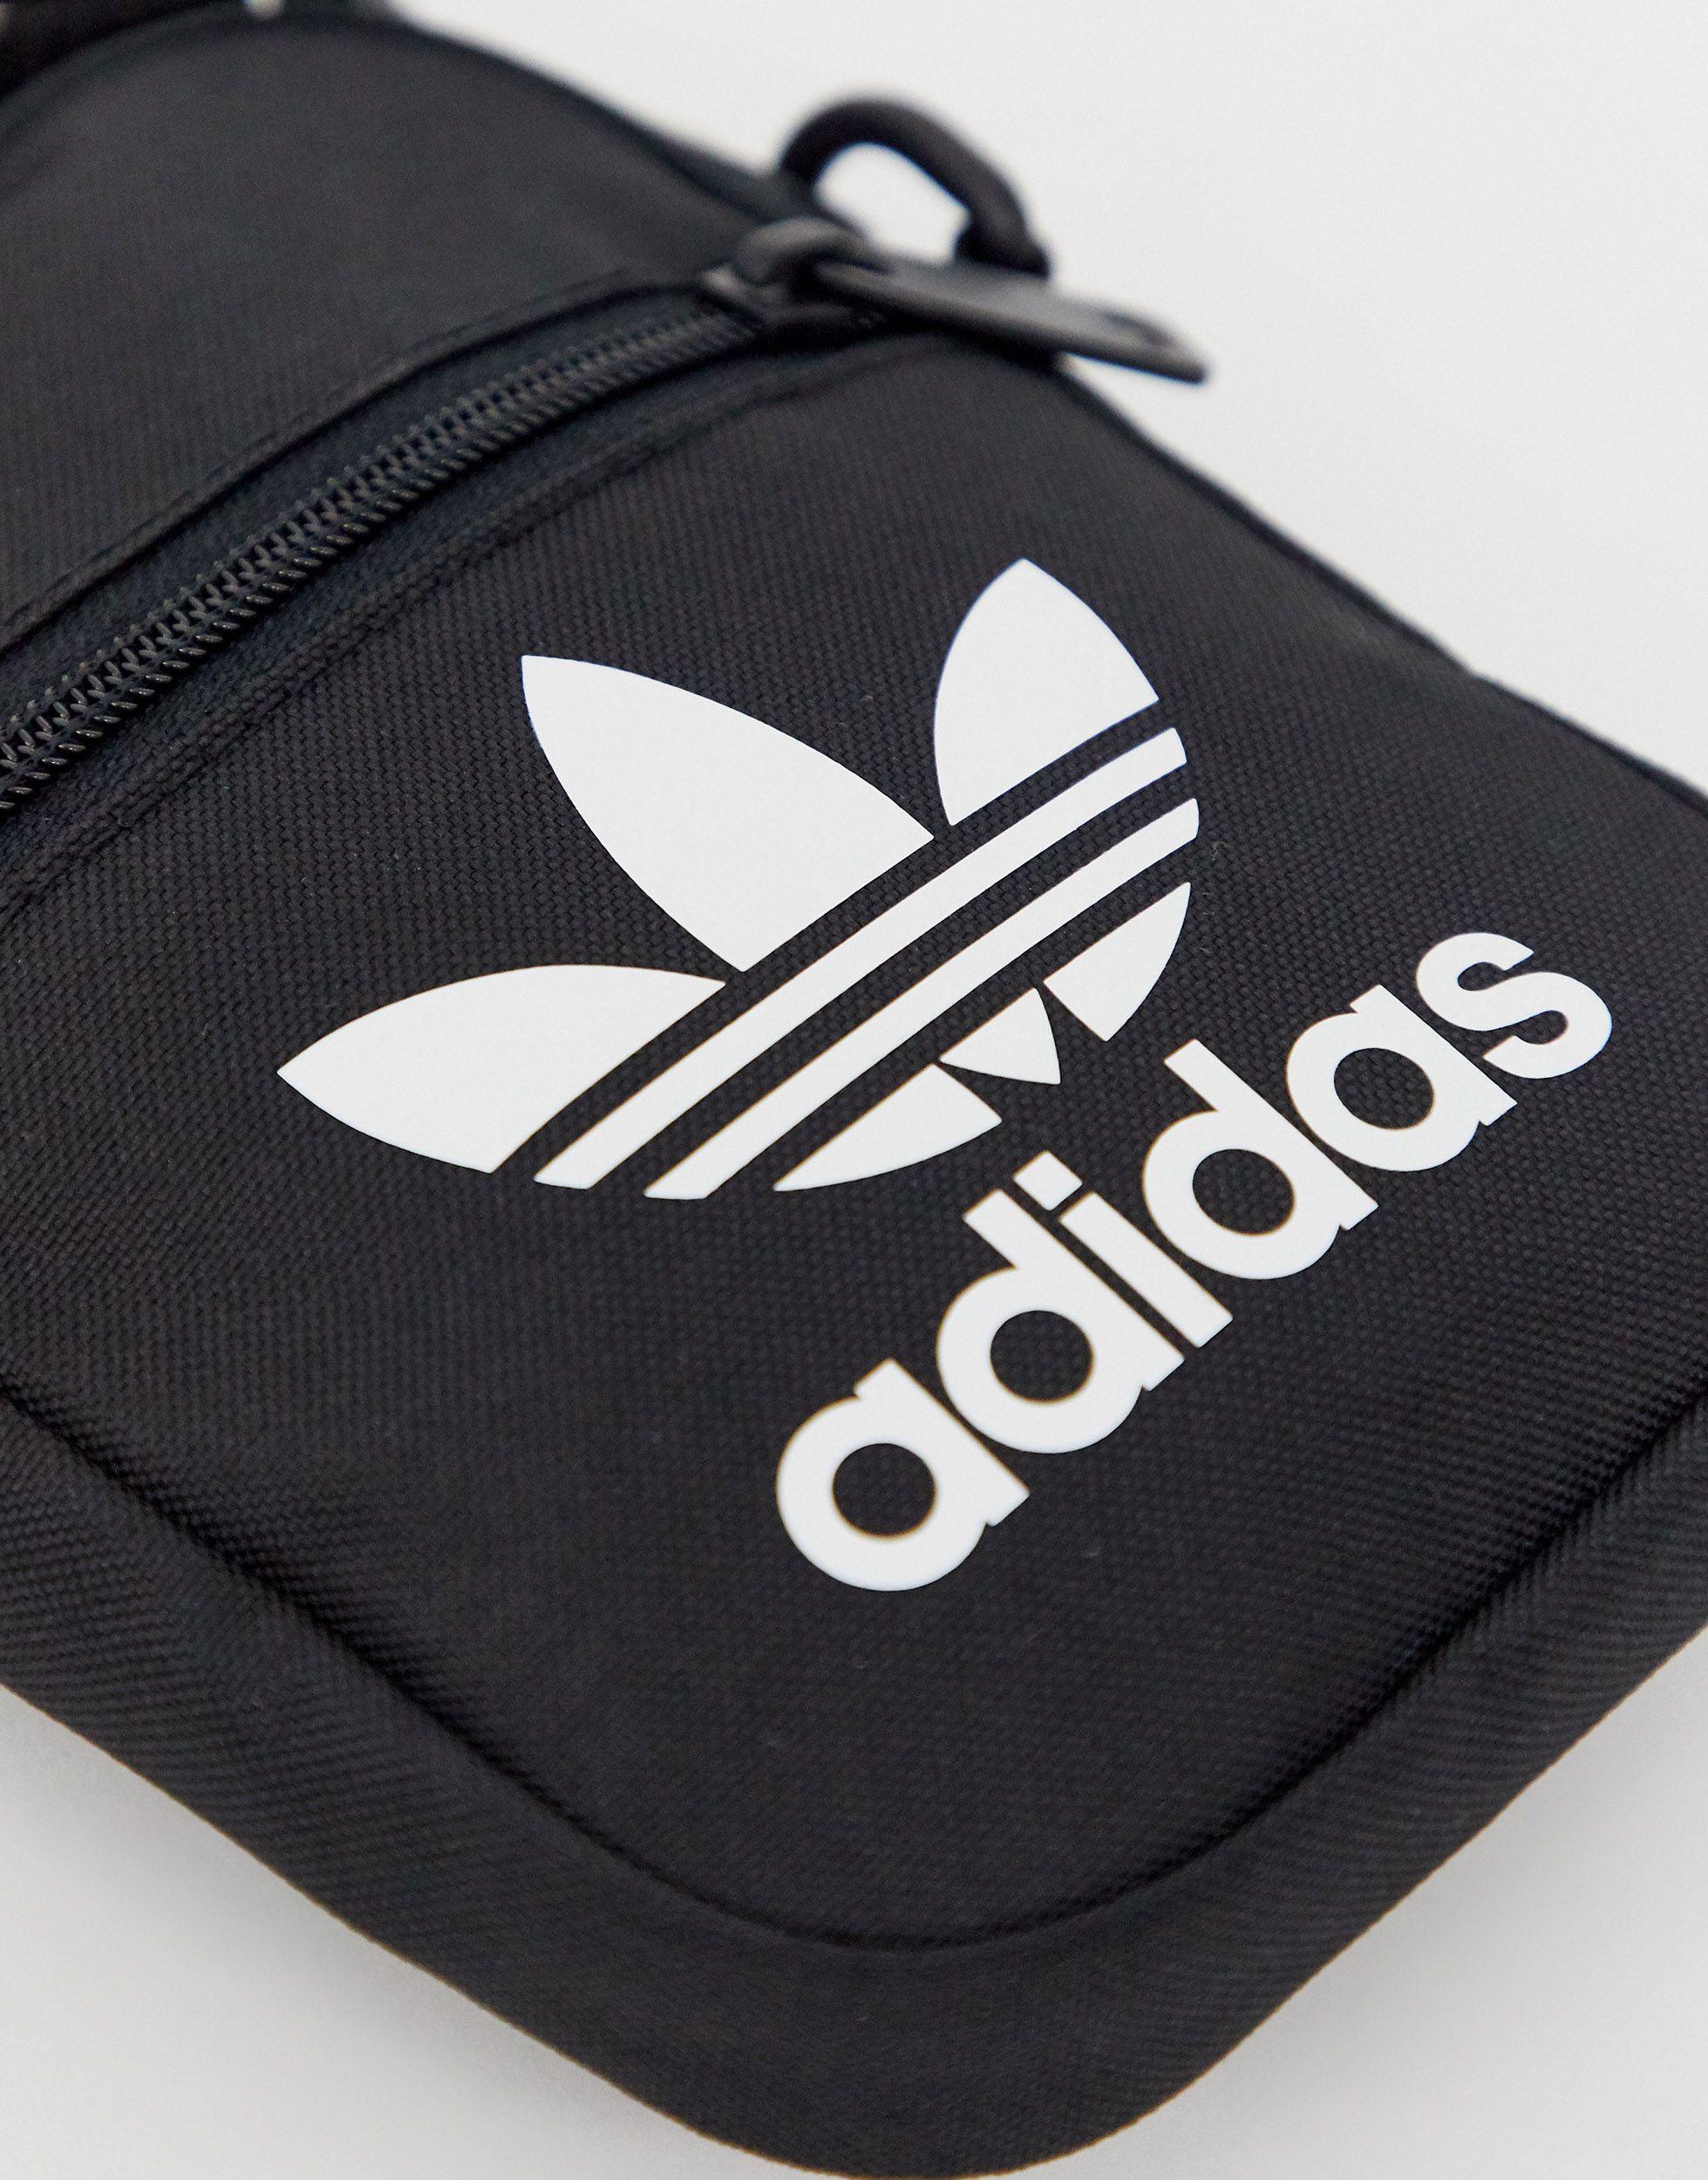 adidas Originals Black Trefoil Fest Bag for Men | Lyst